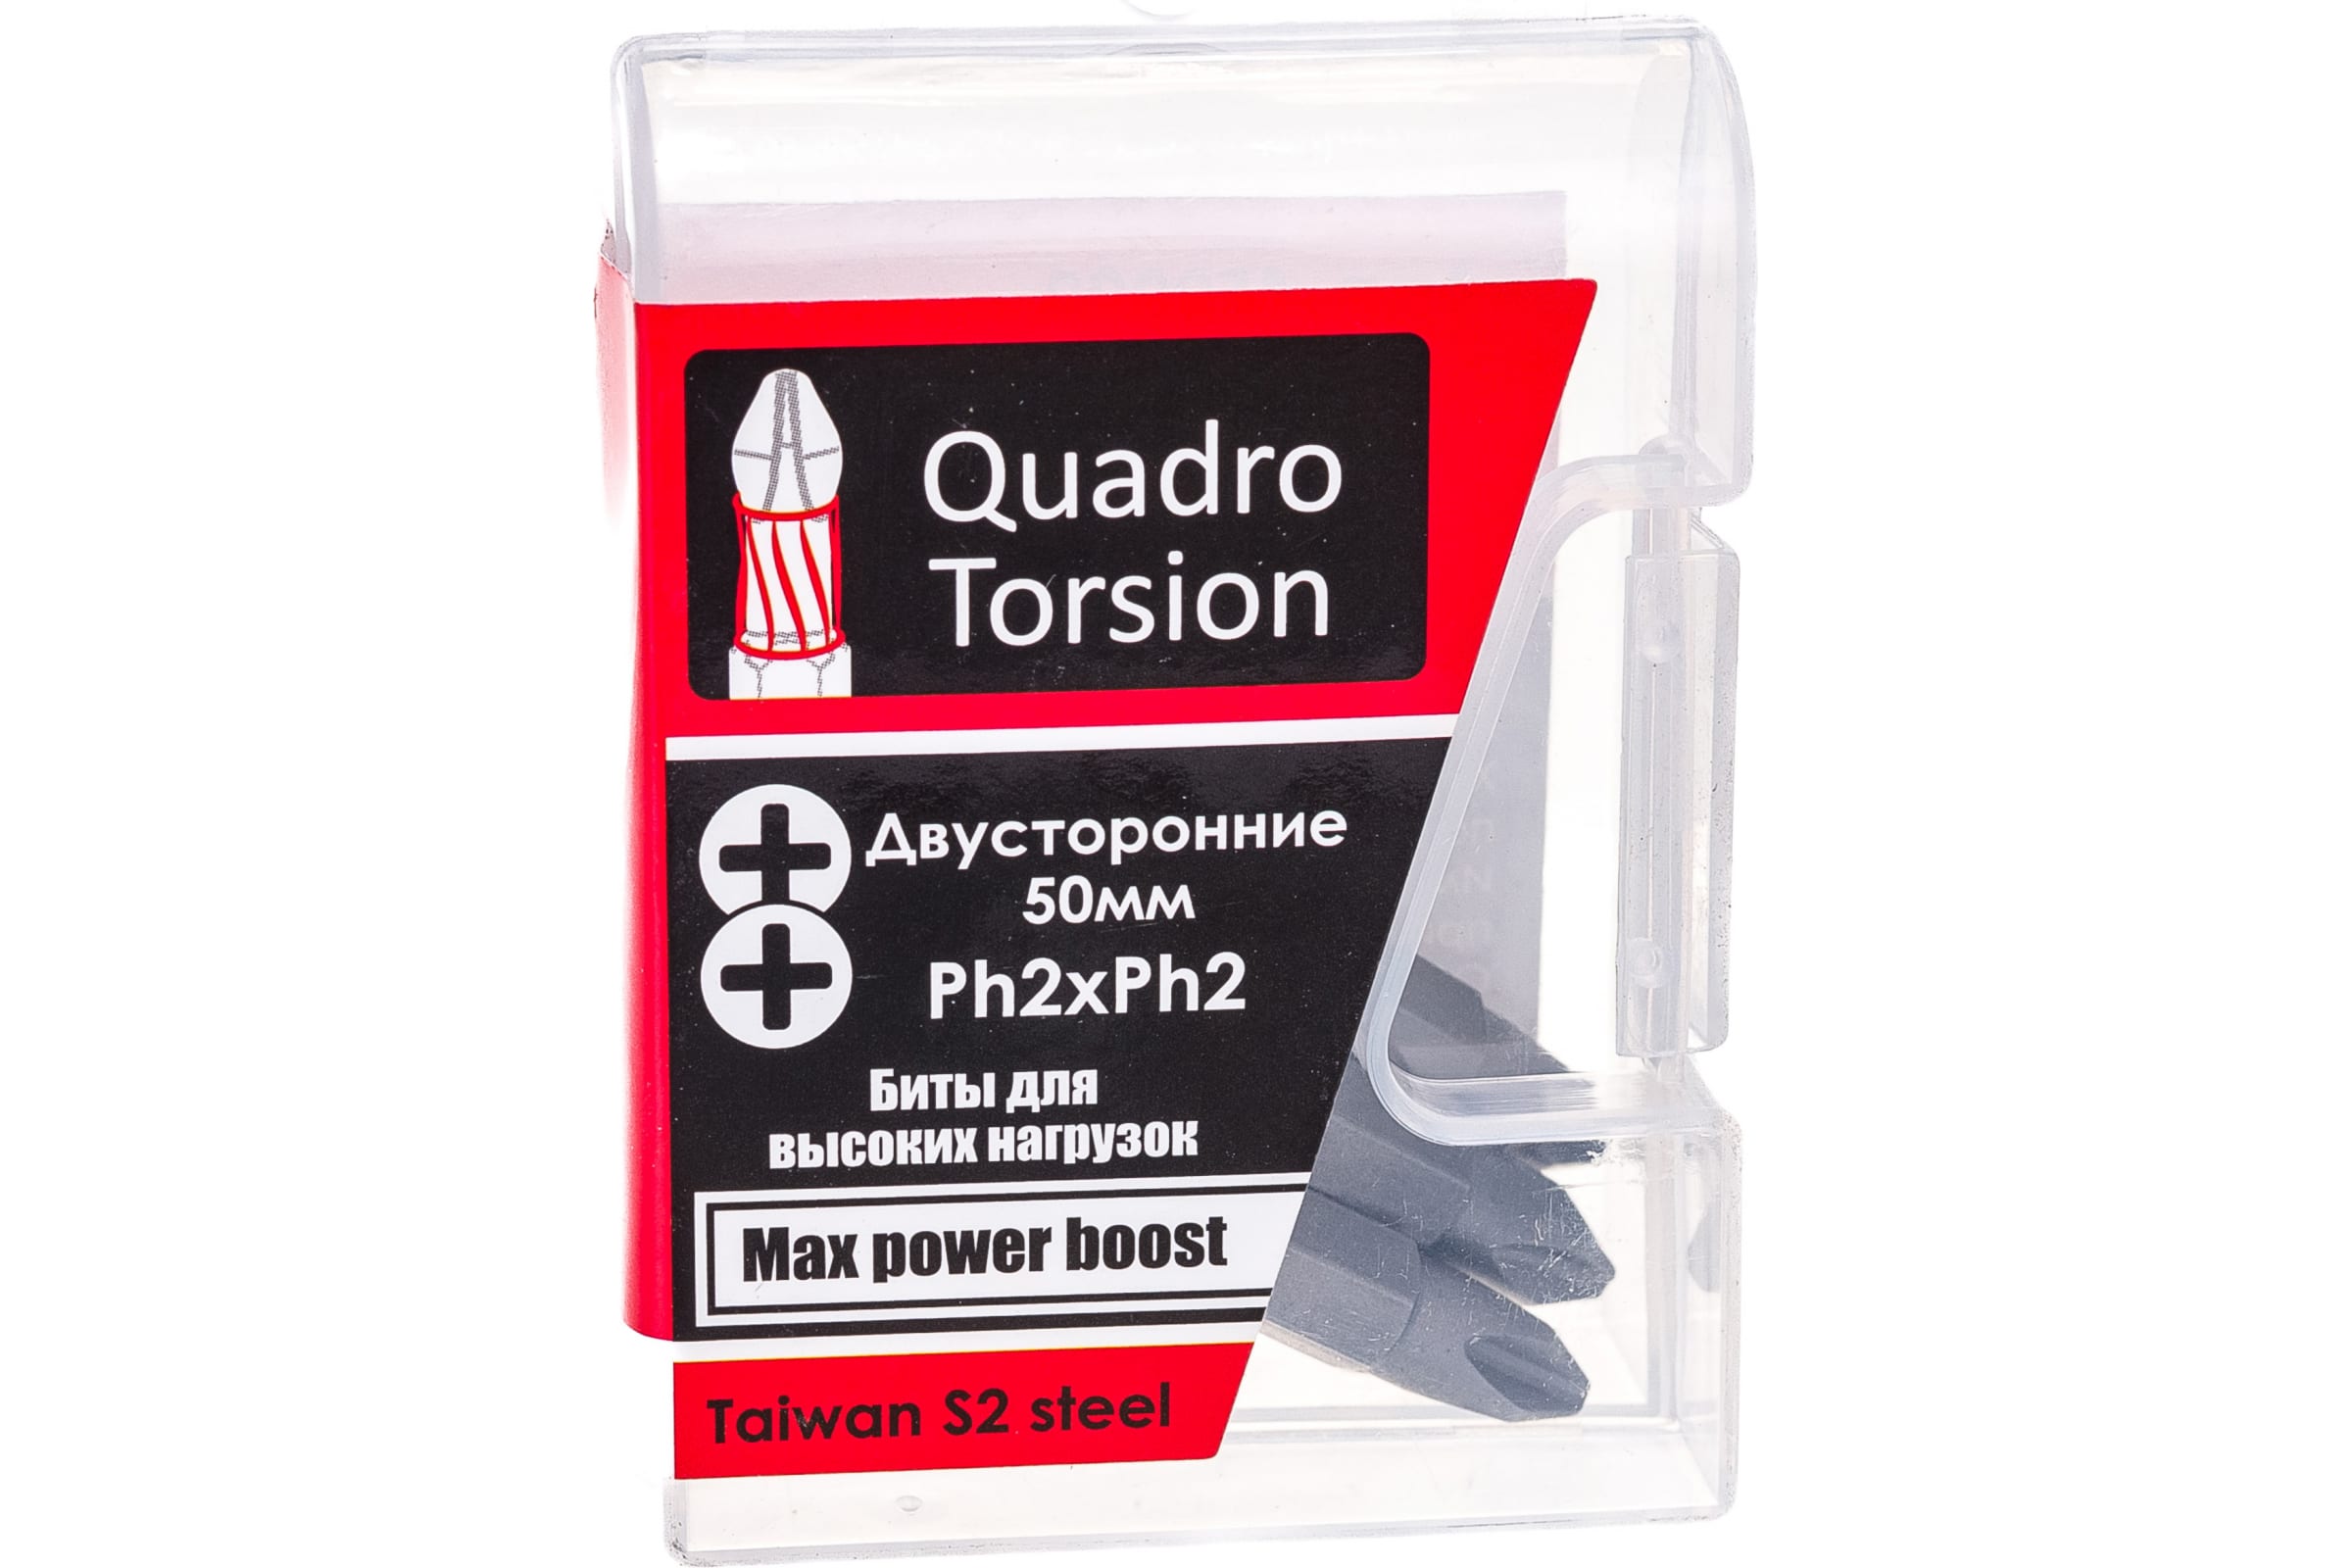 Quadro Torsion бита 1/4 двусторонняя Ph2xPh2 - 50мм 5шт./кор. 450022 бита 5 шт ph2 110 мм 1 4 e6 3 quadro torsion 412110